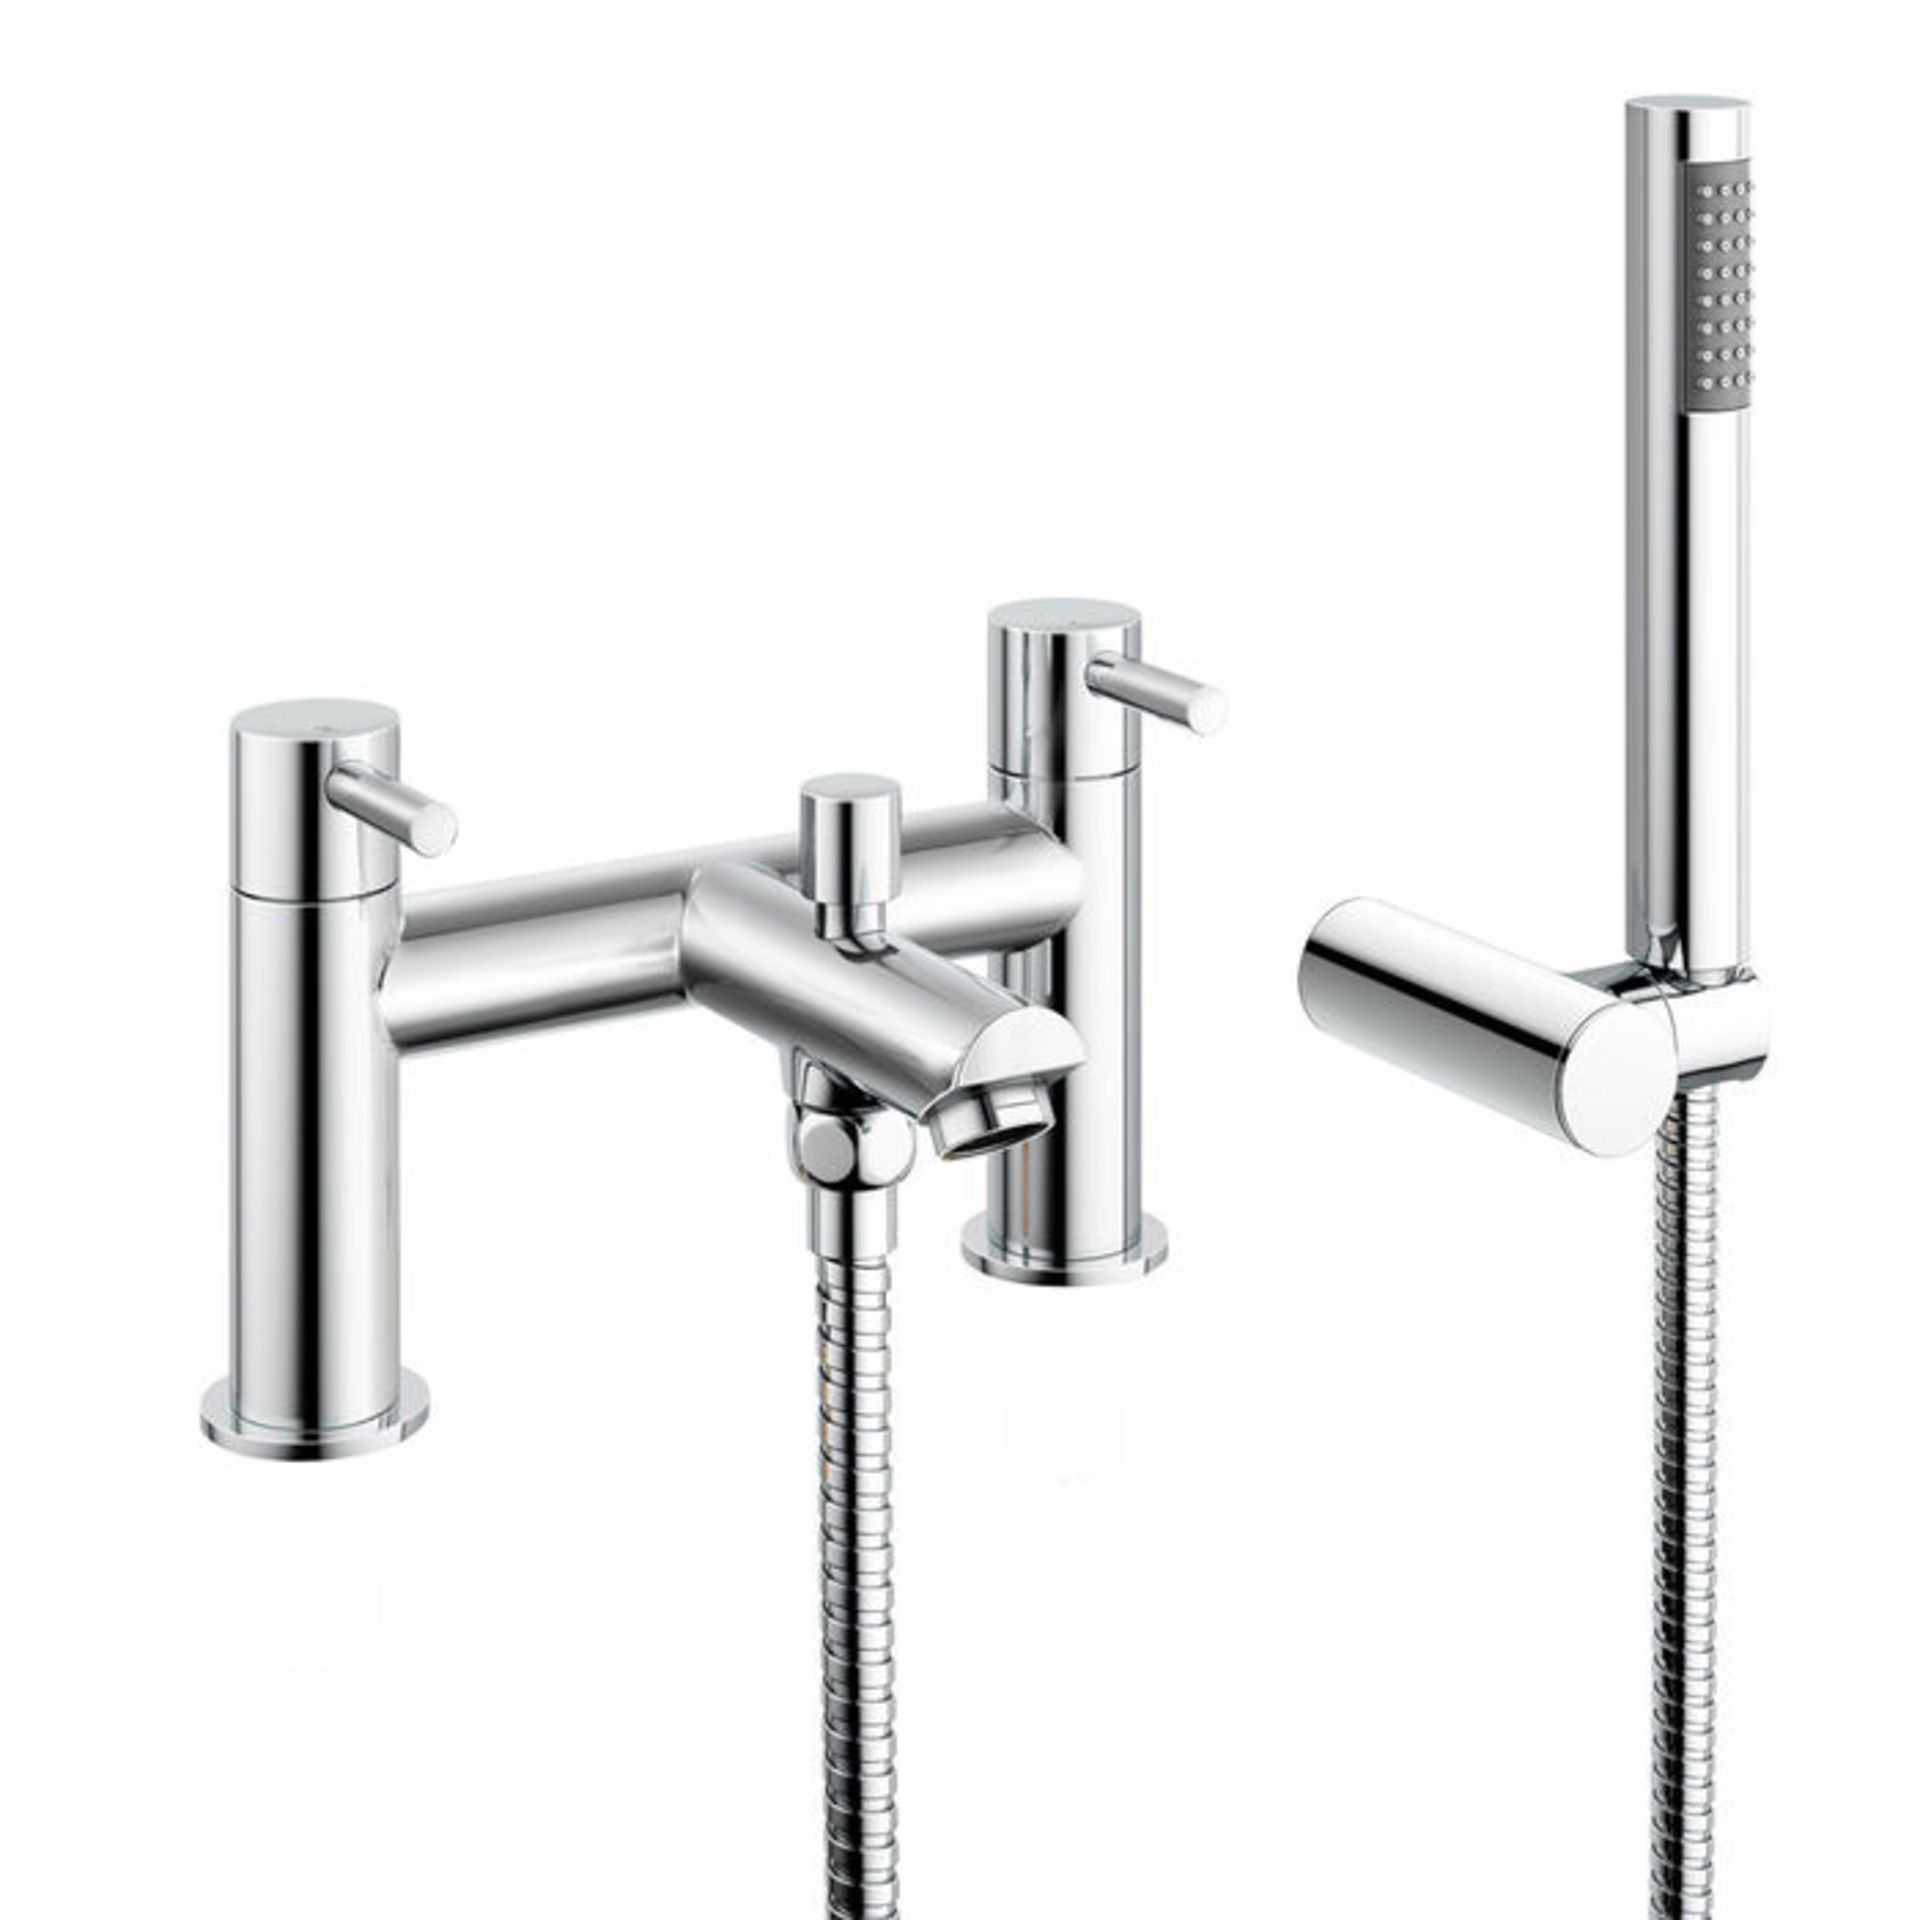 (PT220) Bath Mixer Shower Tap & Handheld. Chrome plated solid brass 1/4 turn solid brass valve